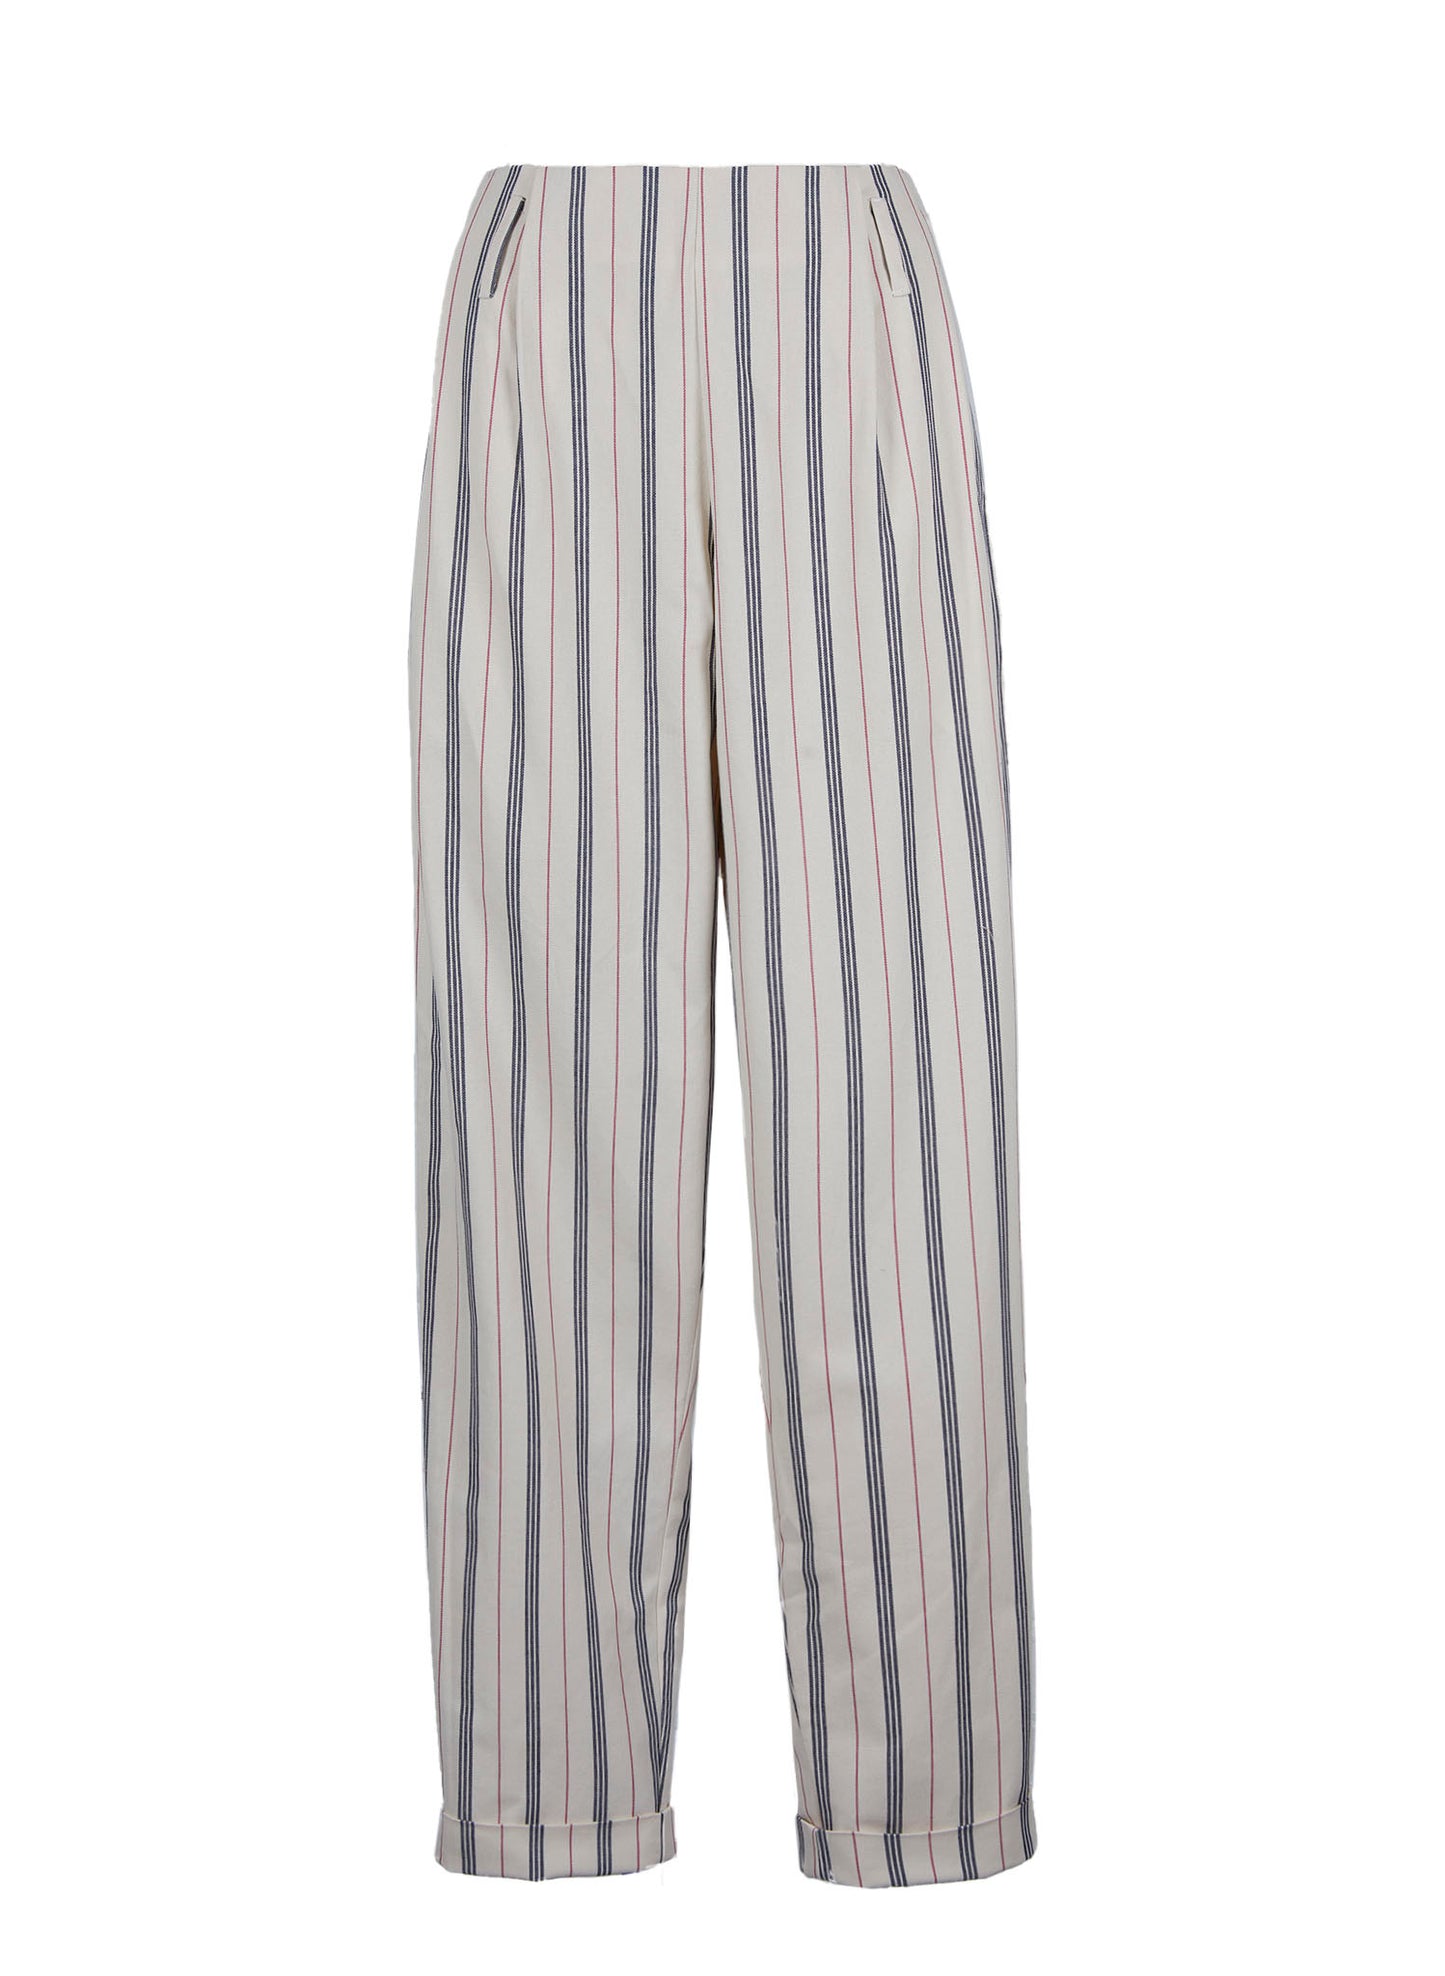 Palava Wilma- Stripe Trousers